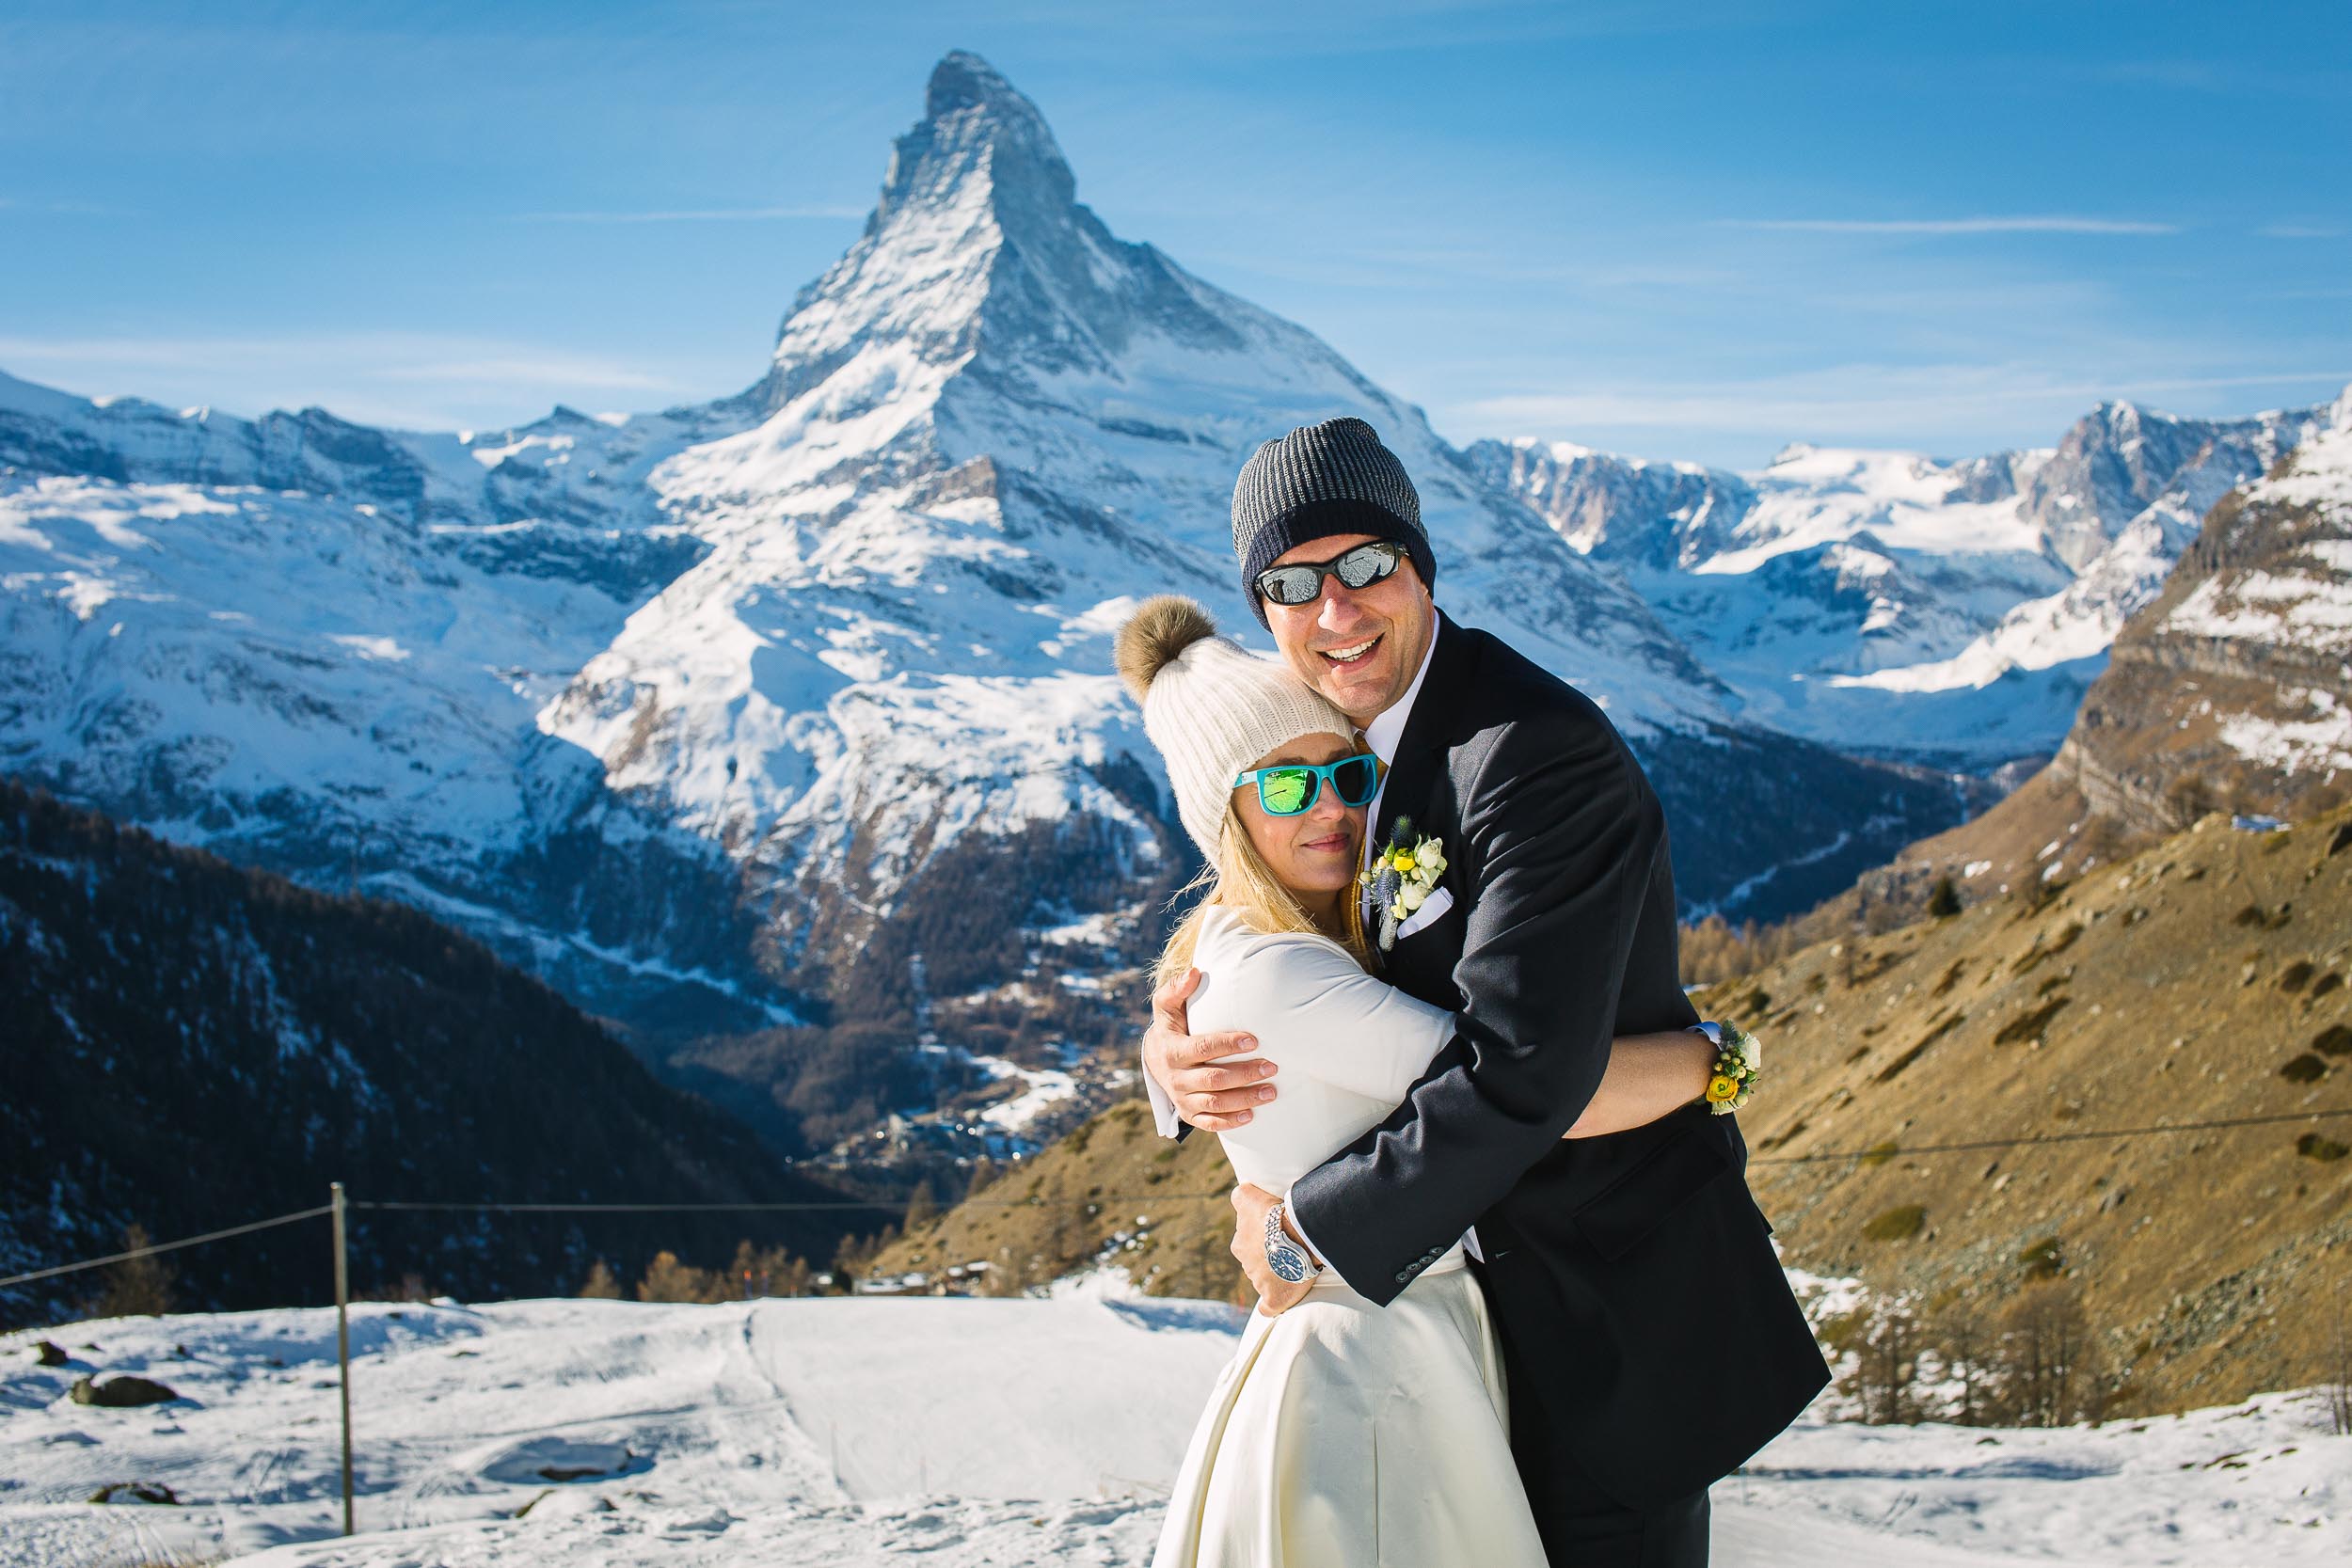 Magical wedding photos in Zermatt